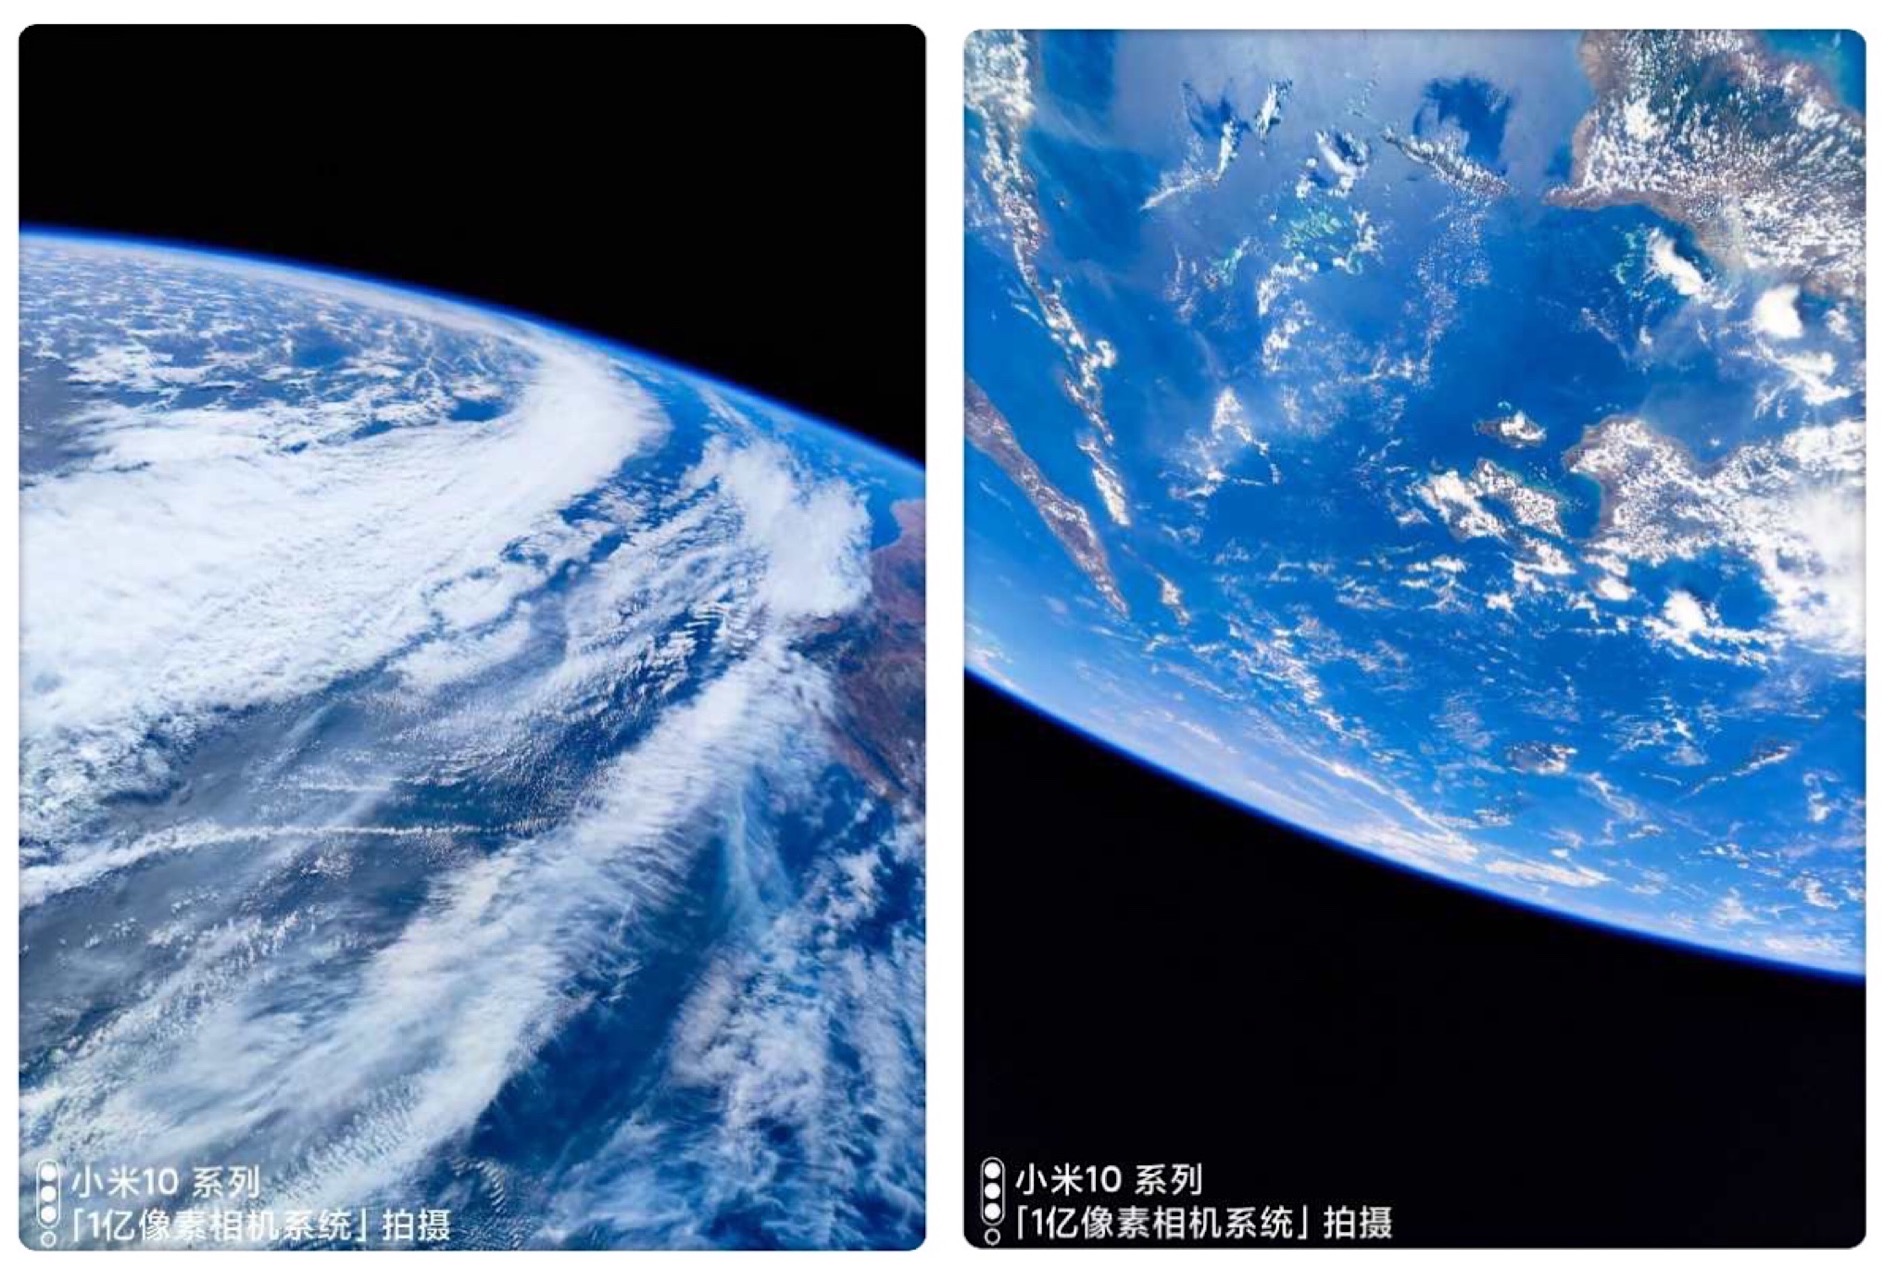 Xiaomi Mi 10 の超高性能カメラ 宇宙写真が撮影可能で民間宇宙開発企業も導入 36kr Japan 最大級の中国テック スタートアップ専門メディア